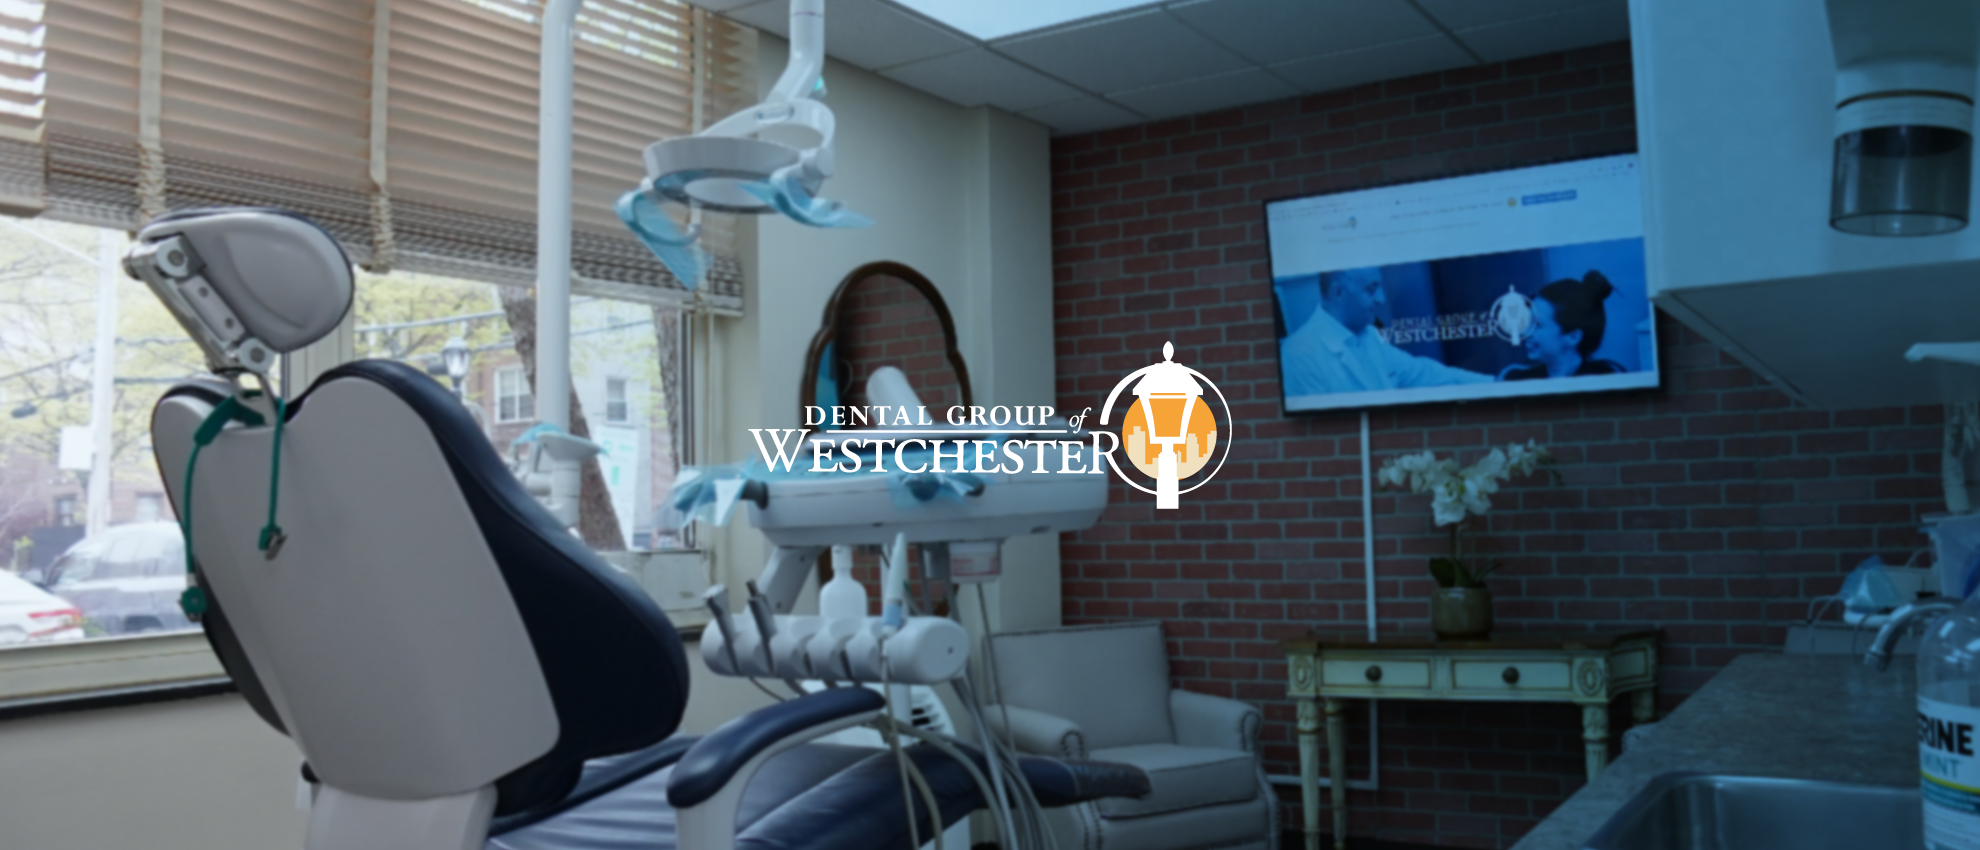 Dentist White Plains NY | Dental Group of Westchester | 914-683-5203